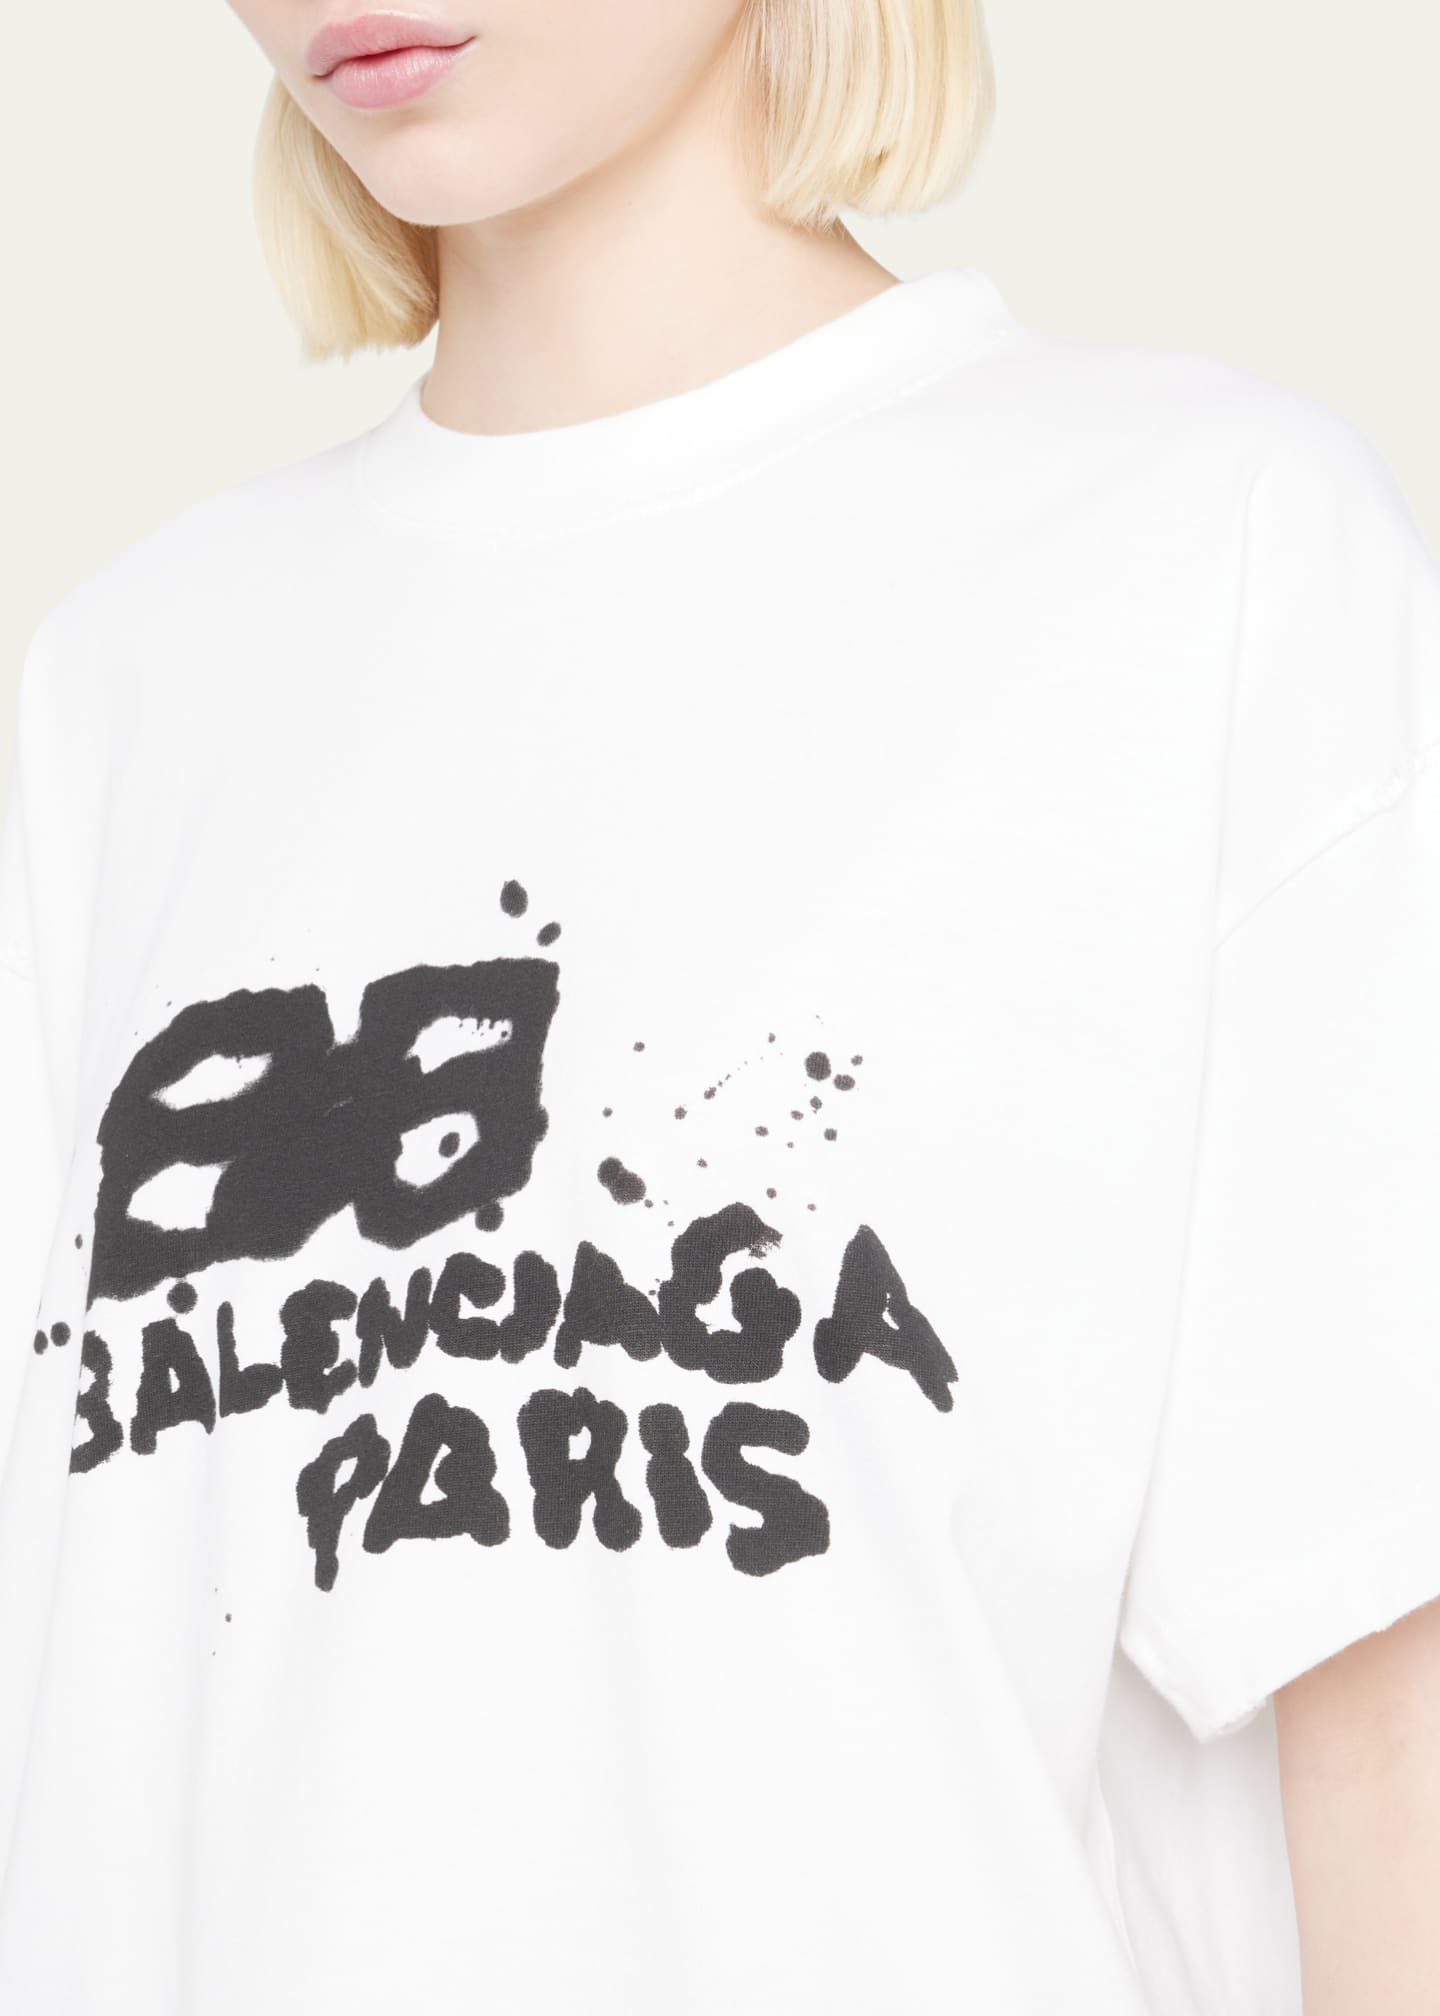 Balenciaga Fashion Institute Medium Fit T-shirt In White/black